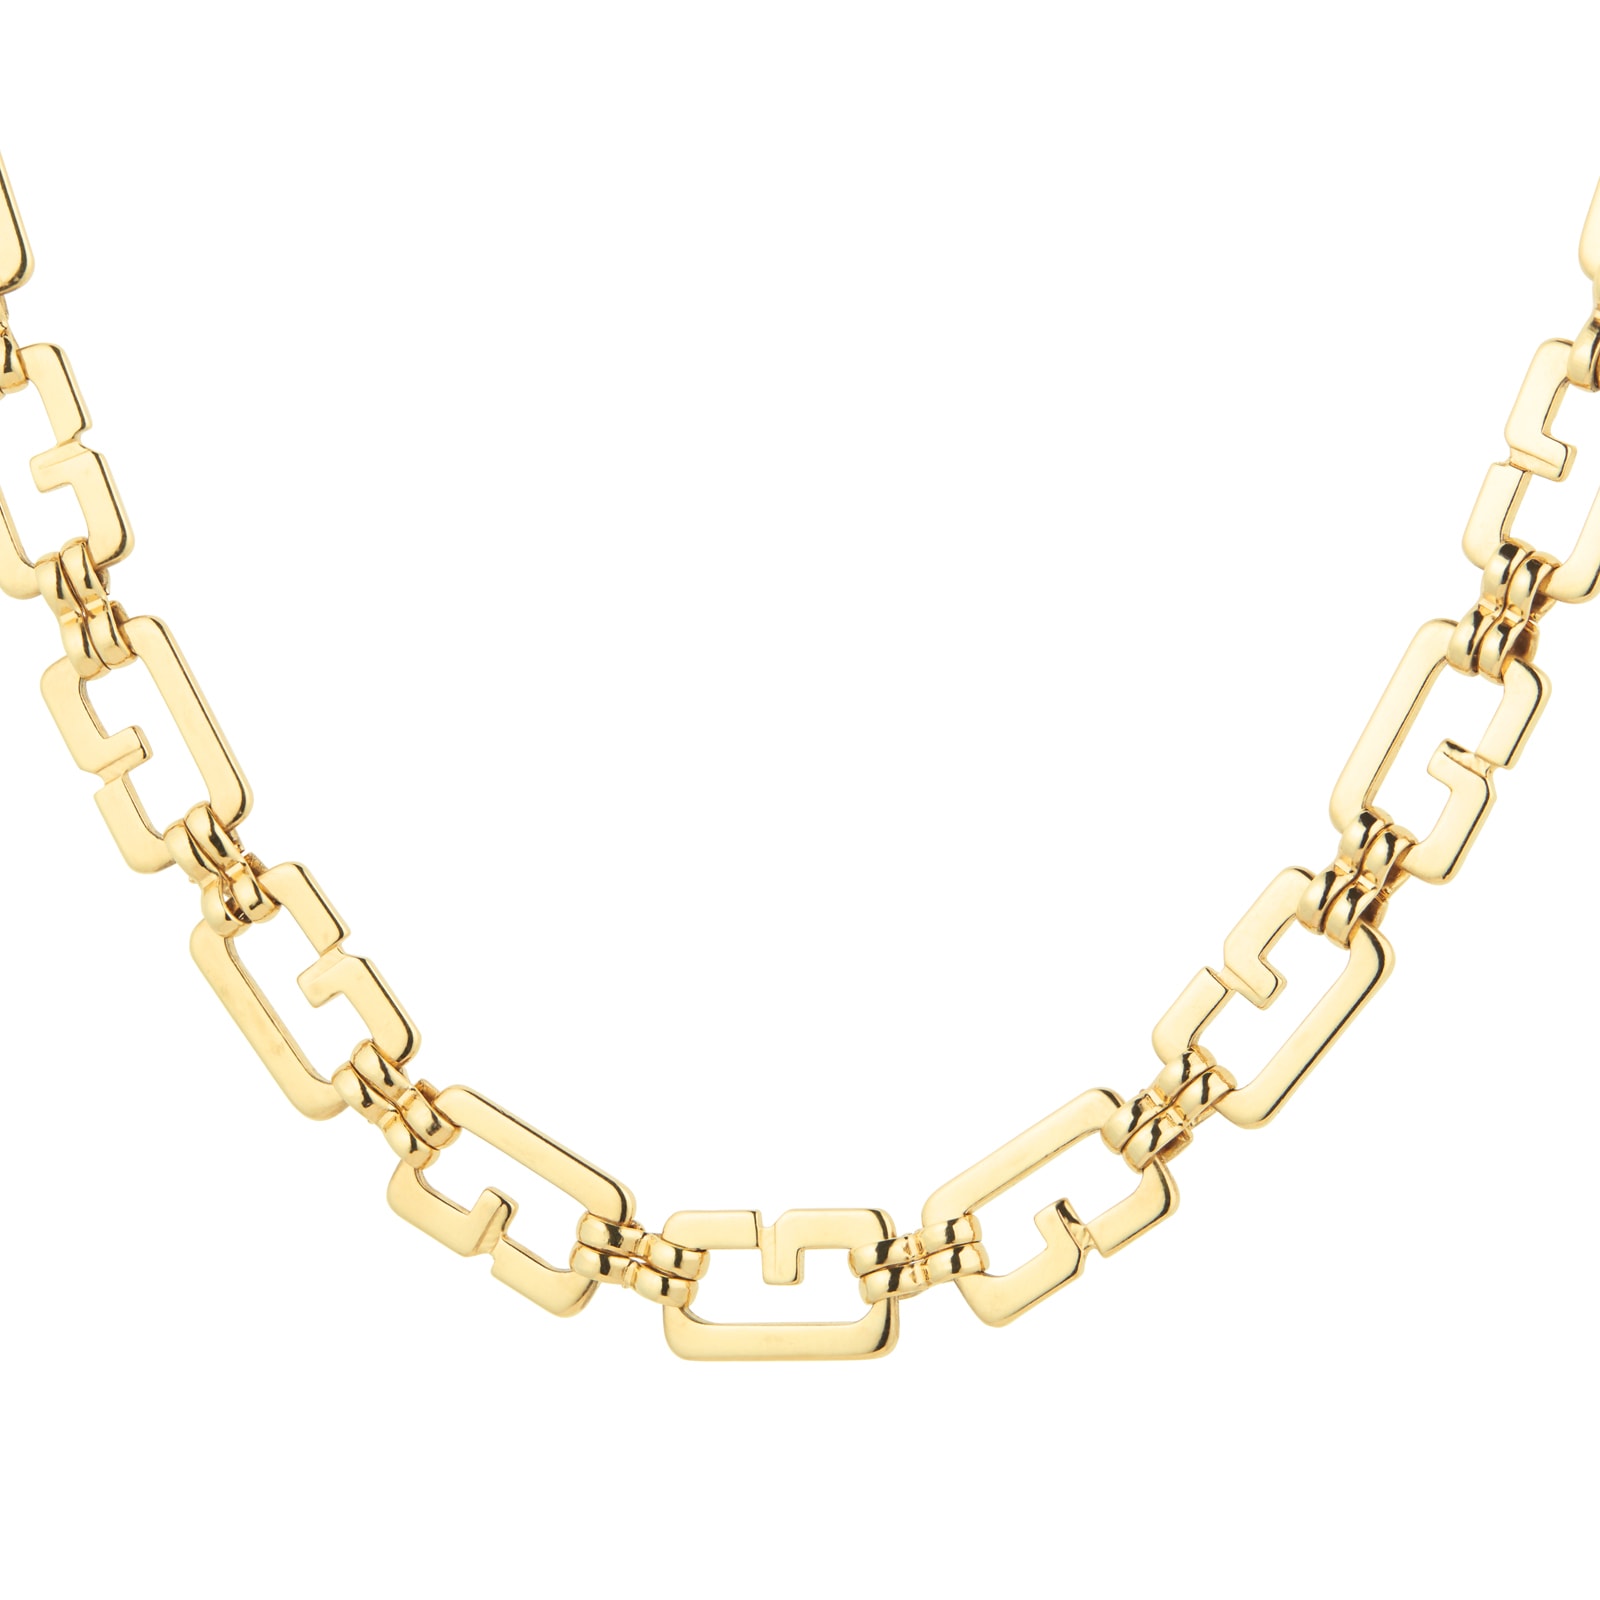 Exclusive Susan Caplan Vintage Givenchy G Link Necklace